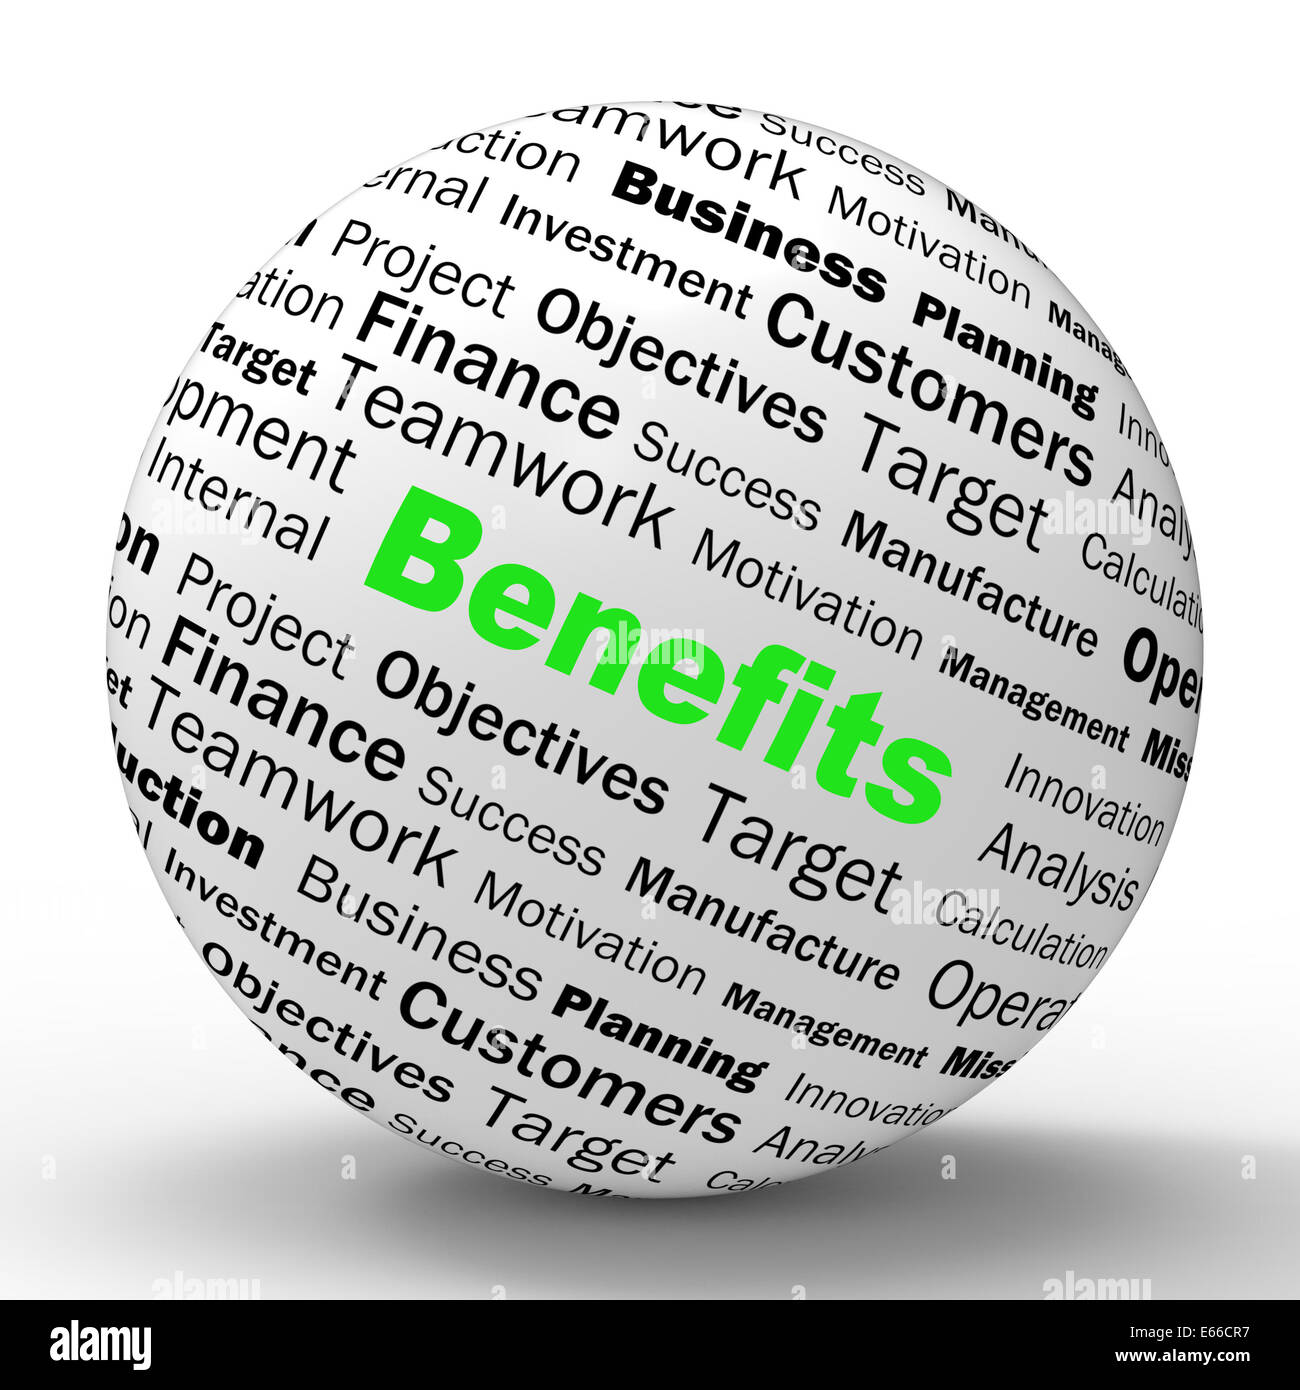 Benefits Sphere Definition Meaning Advantages Rewards Or Monetary Bonuses Stock Photo